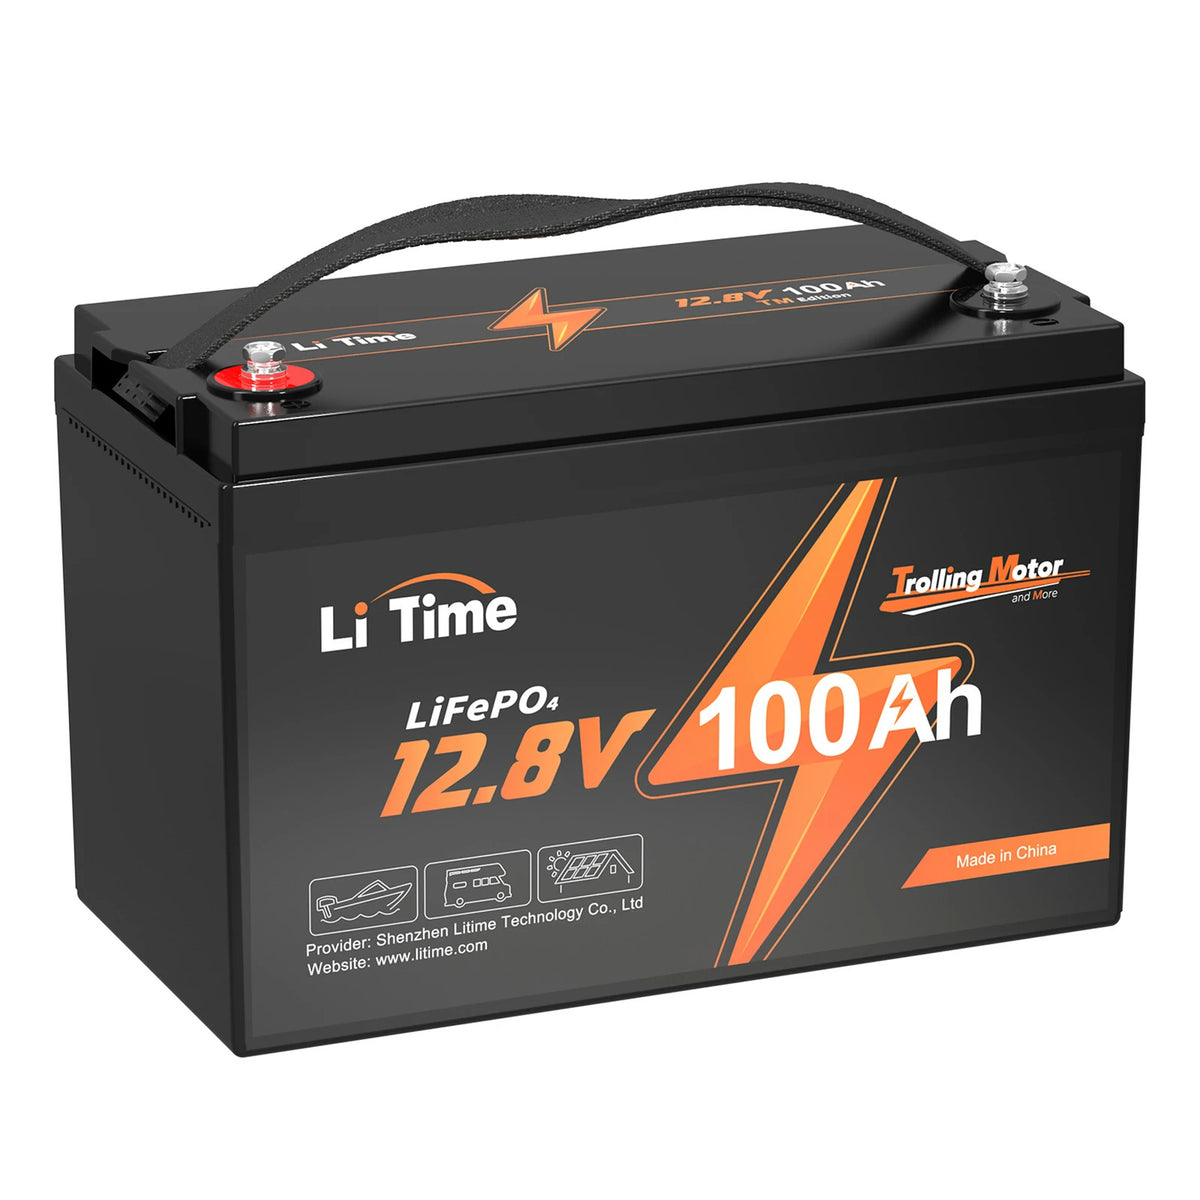 LiTime 12V 100Ah TM LiFePO4 Battery, Low-Temp Protection for Trolling Motors